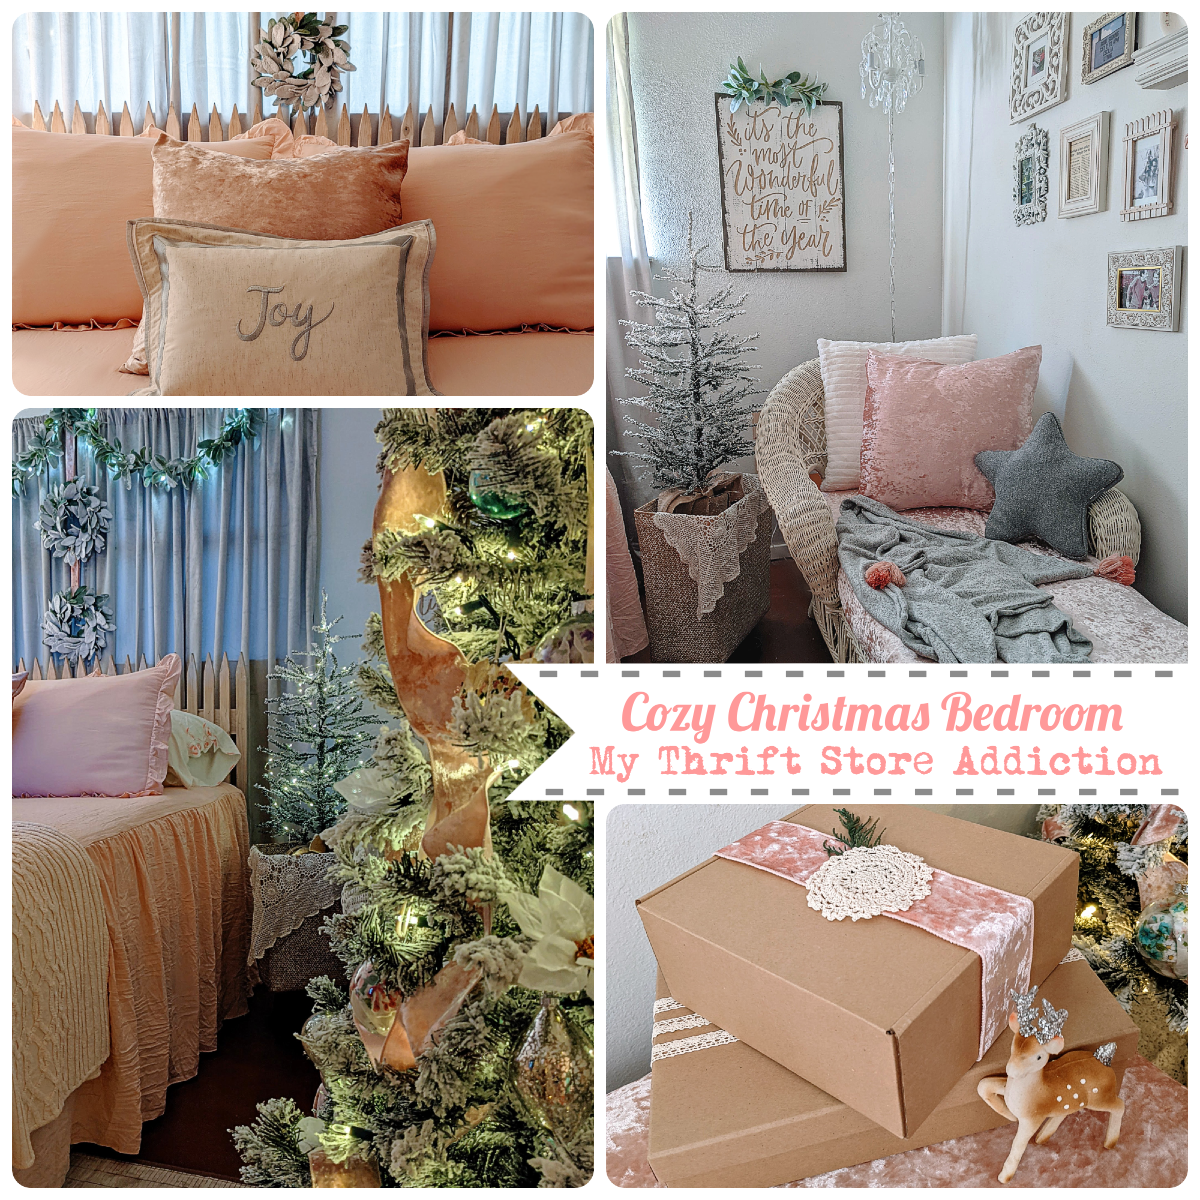 Cozy Christmas bedroom